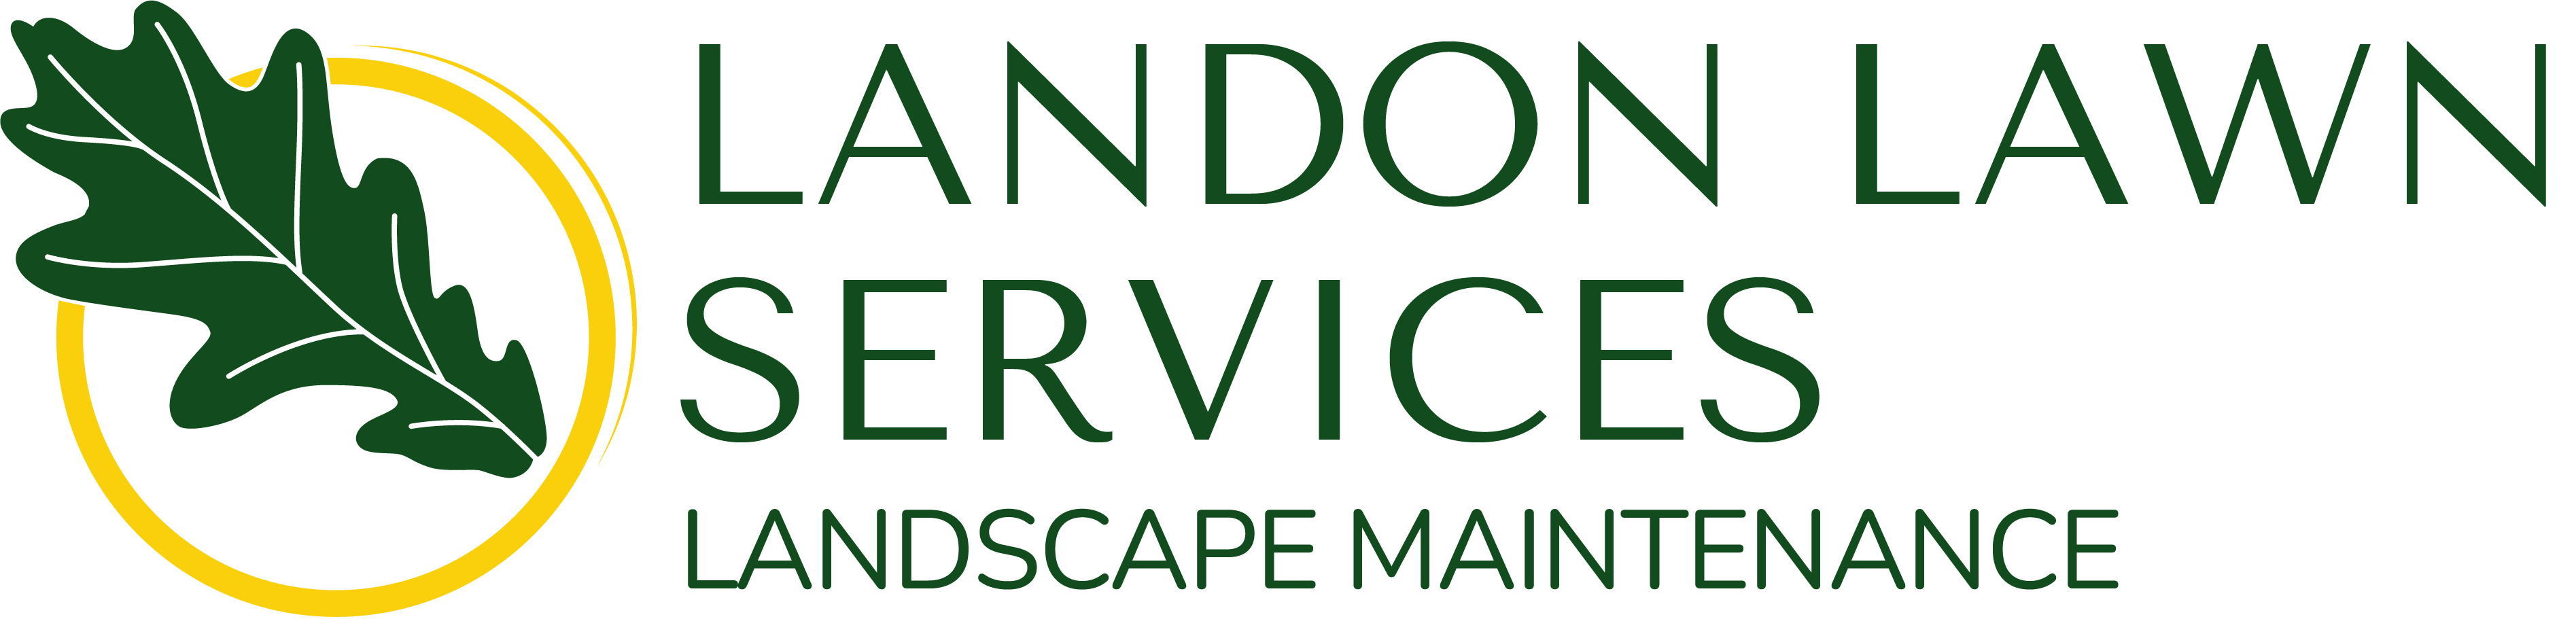 Landon Lawn Services